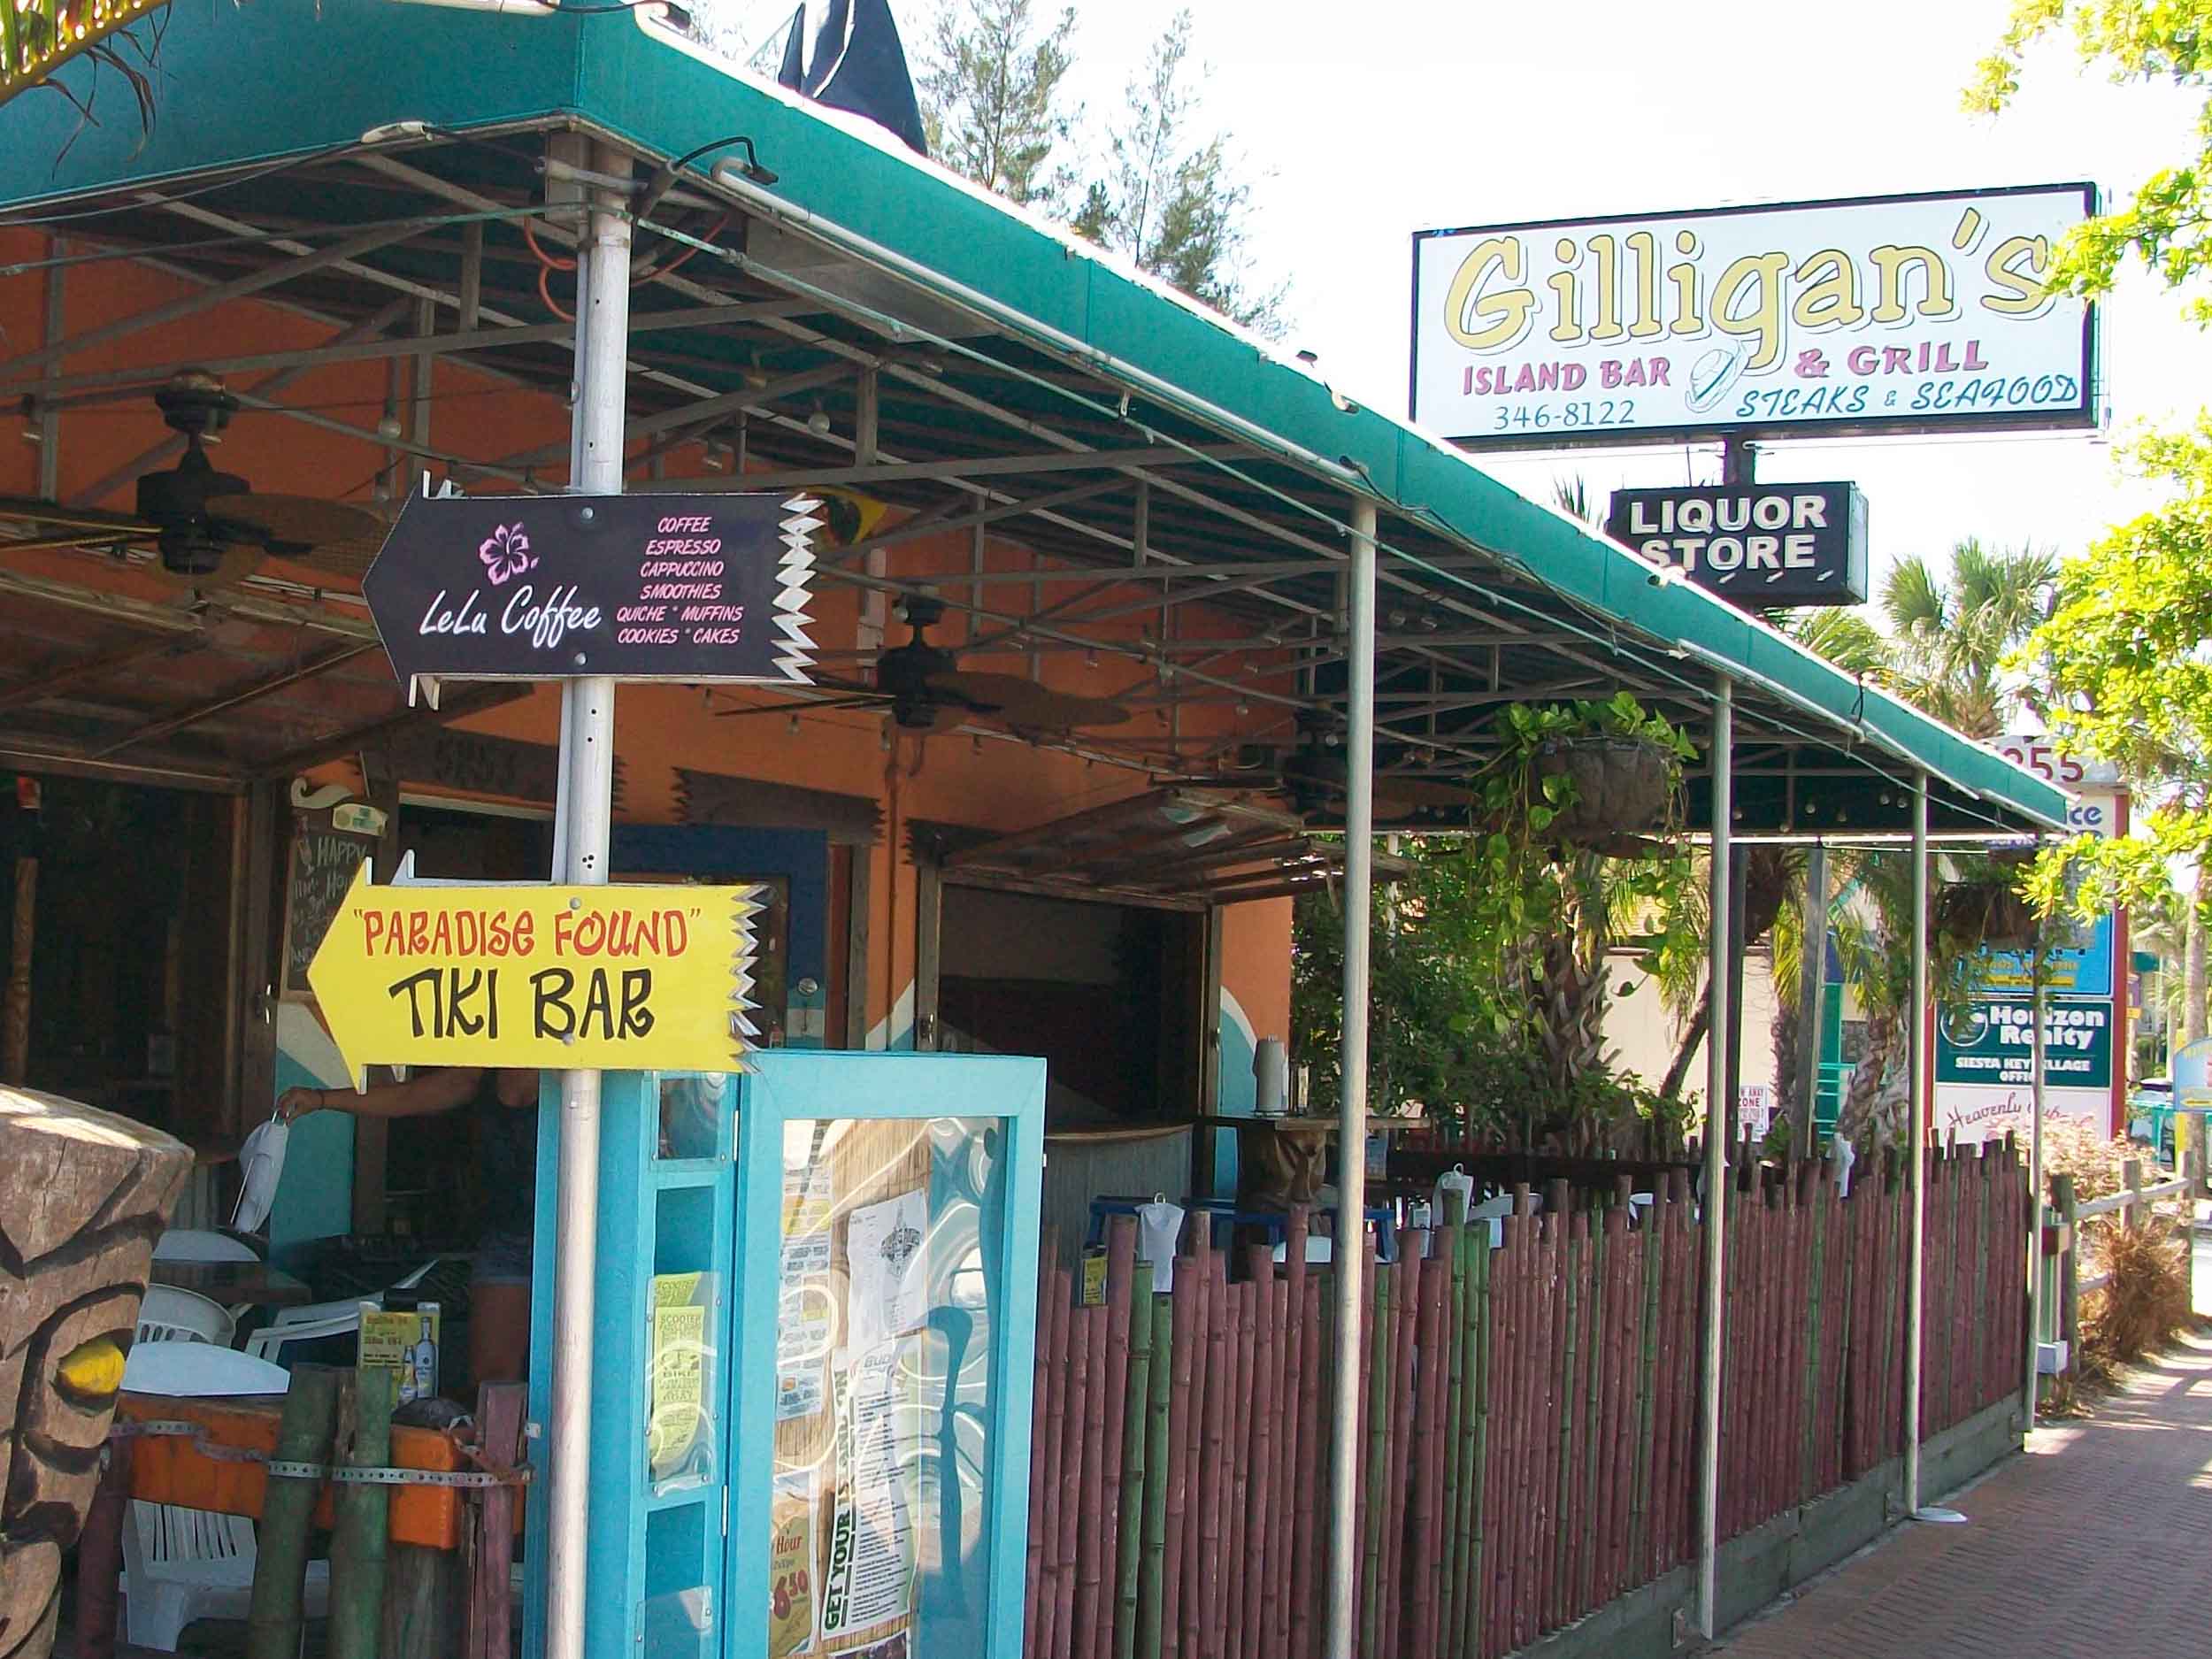 Gilligan's Island Bar and Grill Entrance